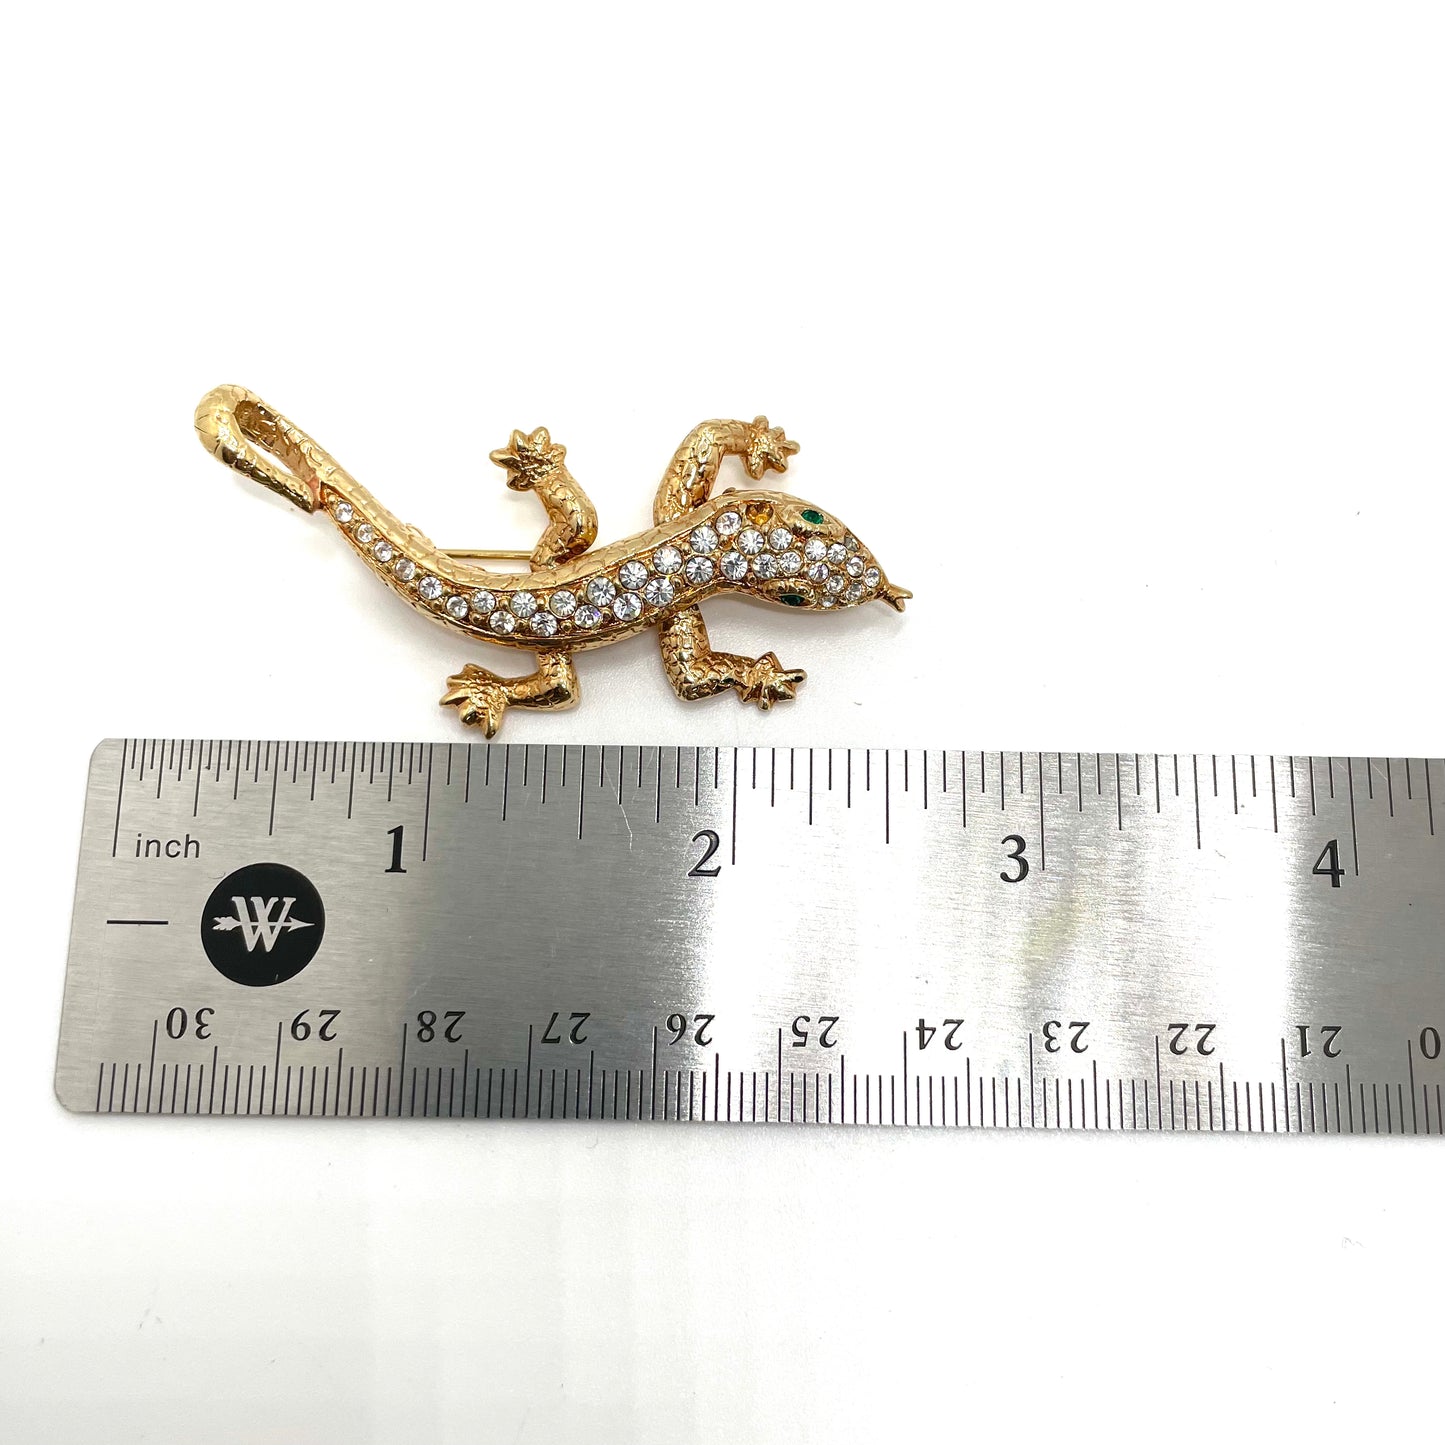 Vintage Gold & Crystal Lizard Pin